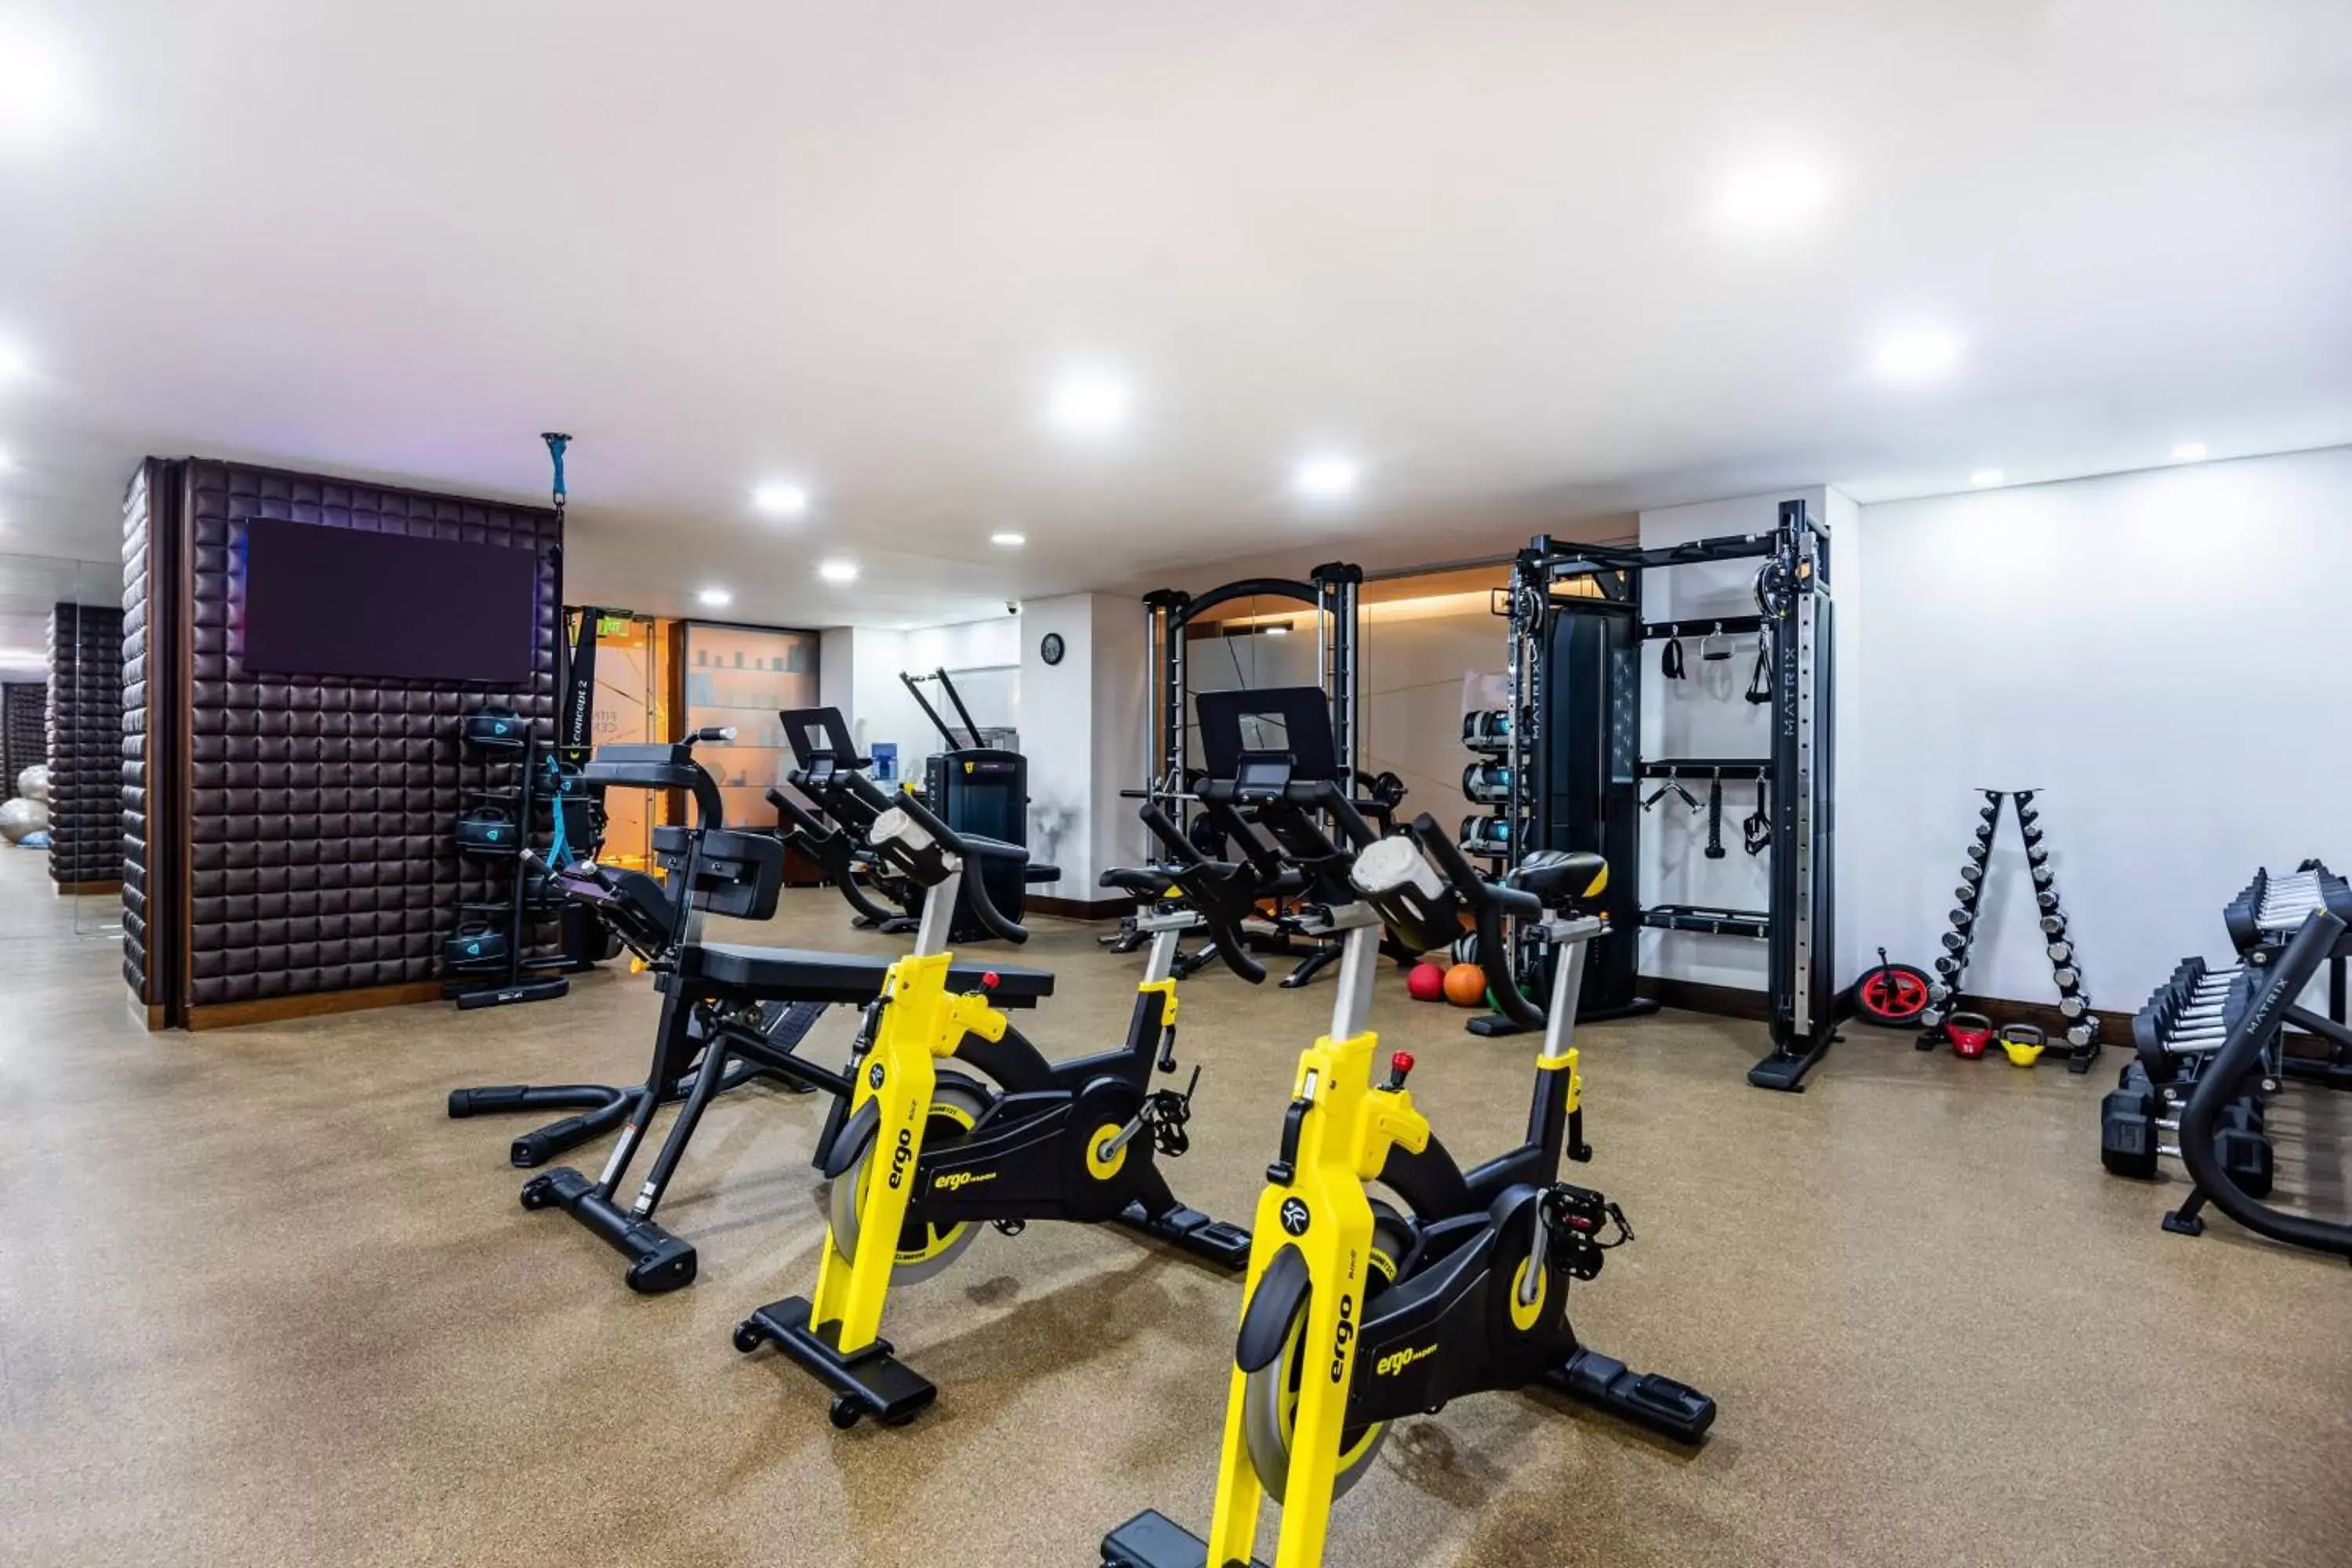 Fitness centre/facilities, Fitness Center/Facilities in JW Marriott Hotel Bogotá